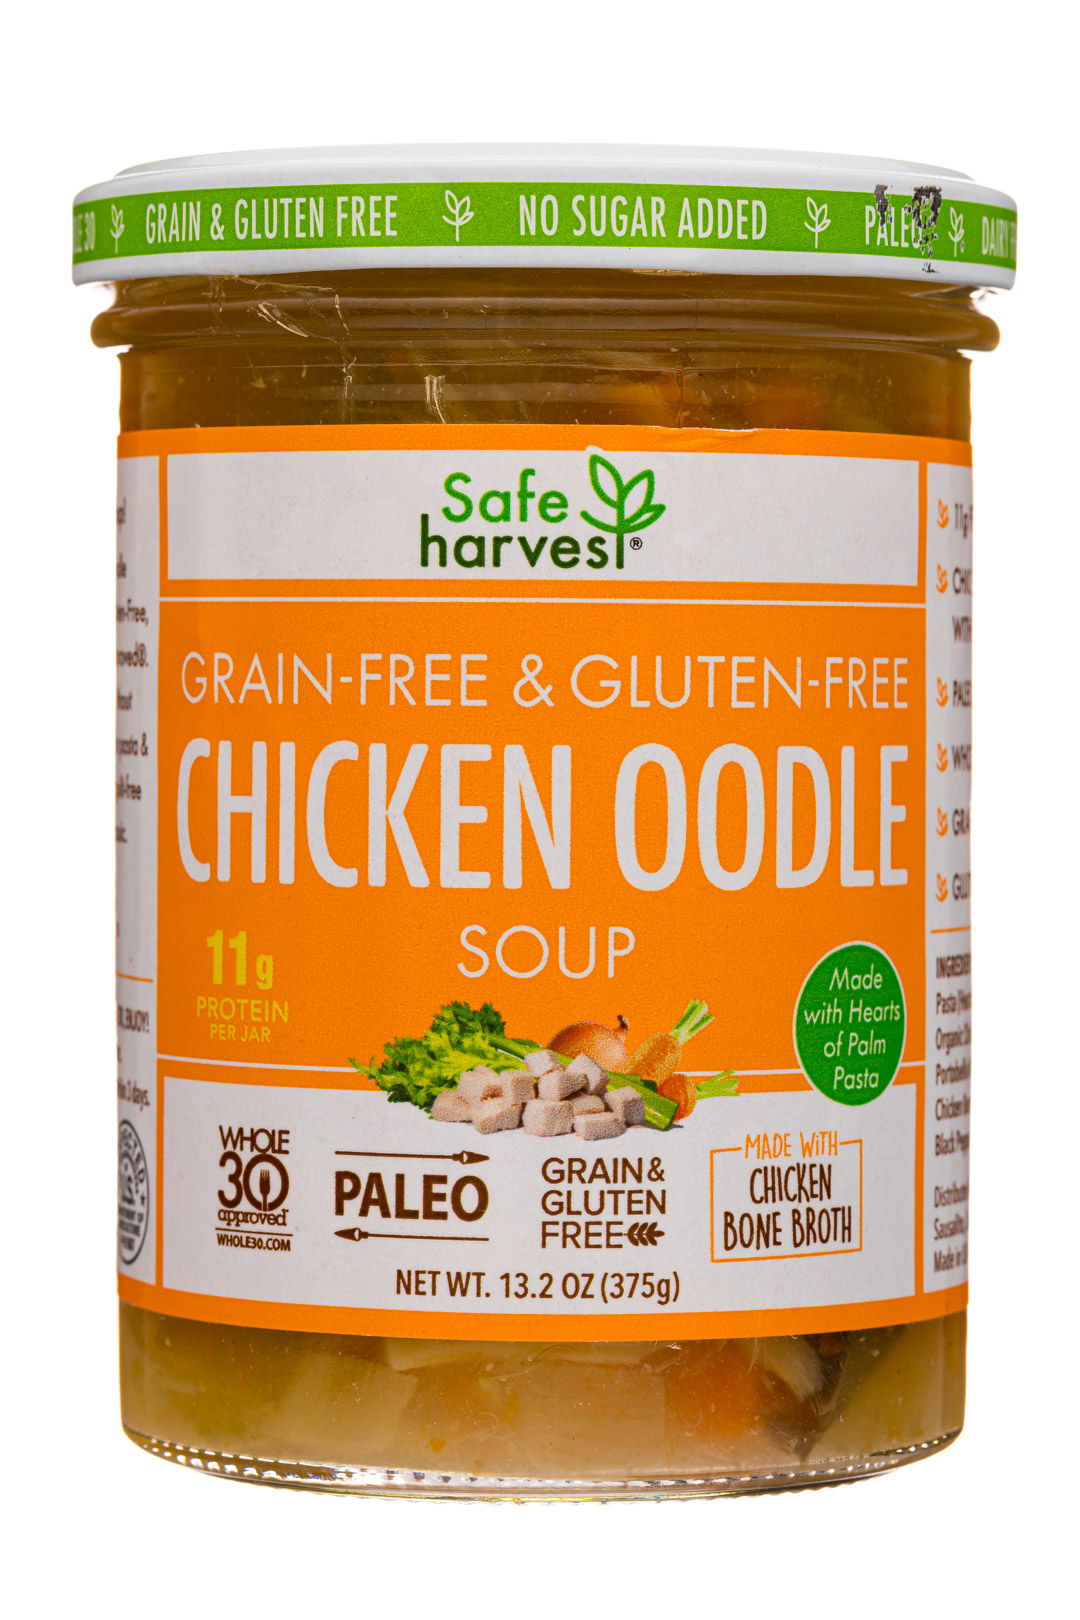 Grain-Free & Gluten-Free Chicken Oodle